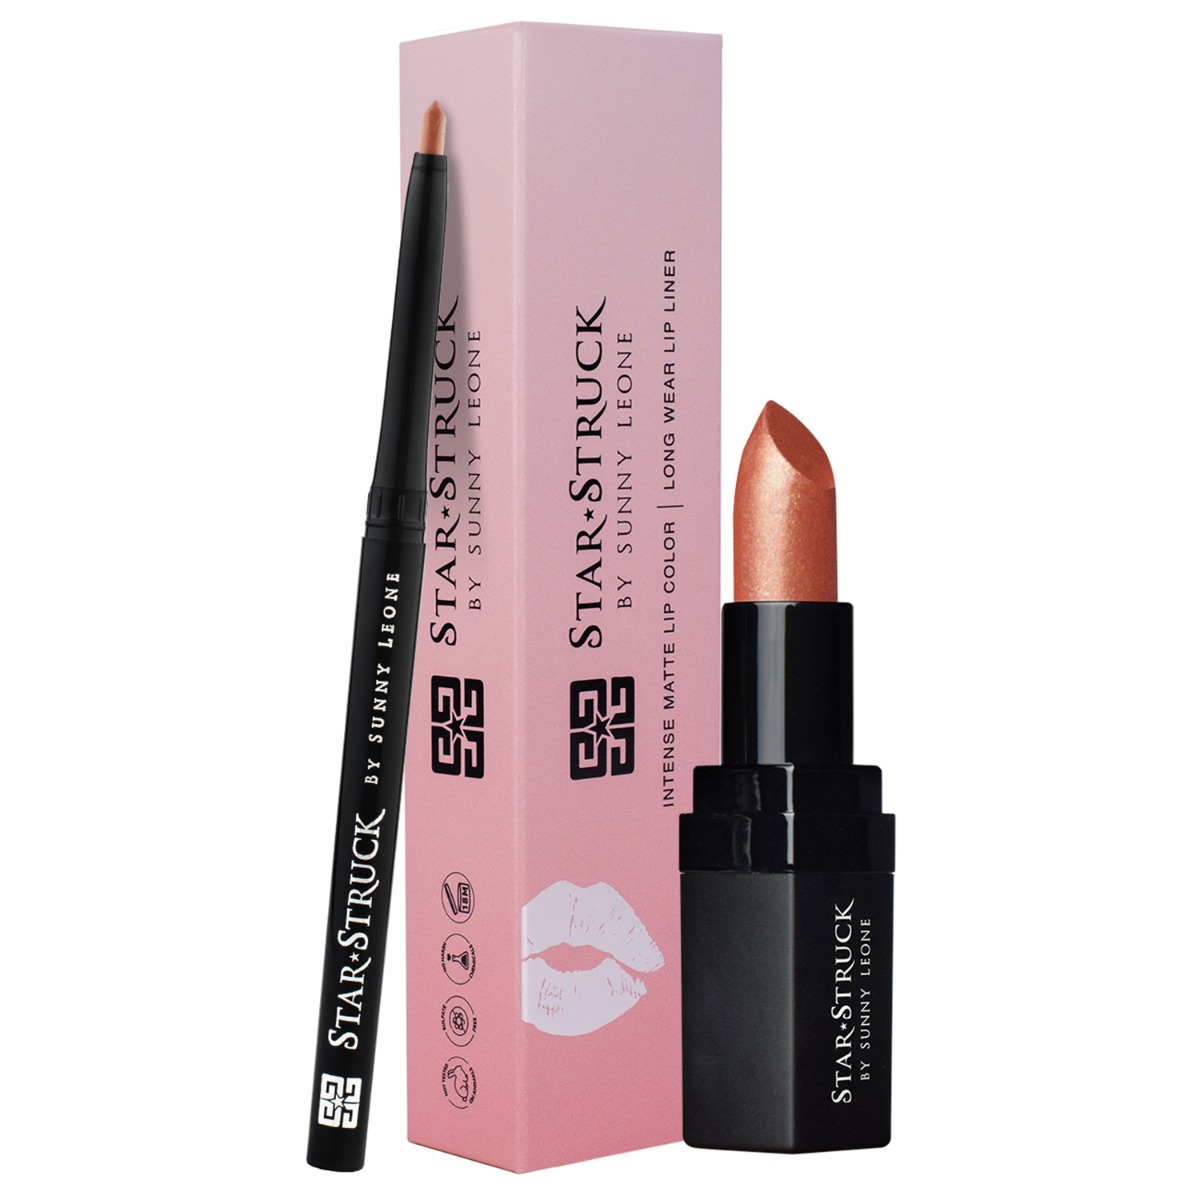 Star Struck by Sunny Leone Bronze Beauty Lip Kit - Lipstick, 4.45 gm + Lip Liner, 0.25gm Combo